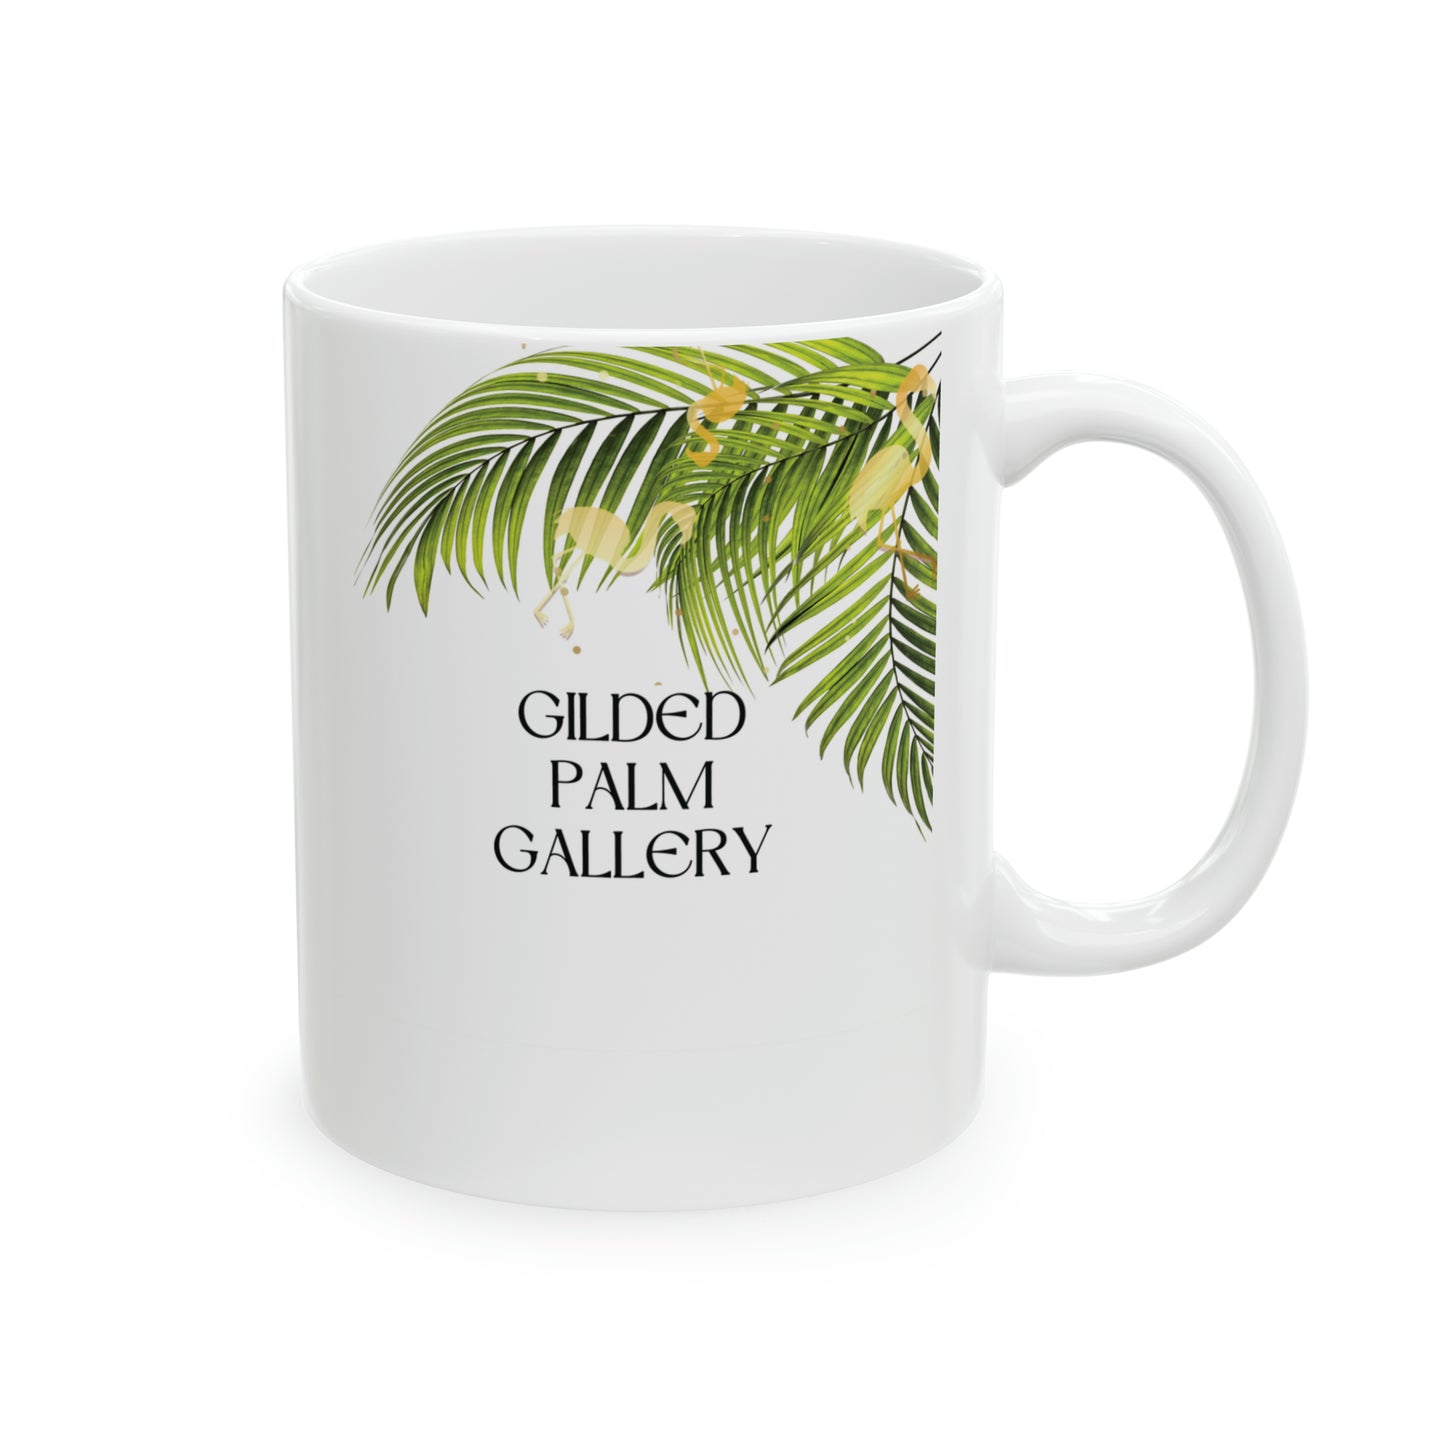 Gilded Palm Gallery Mug